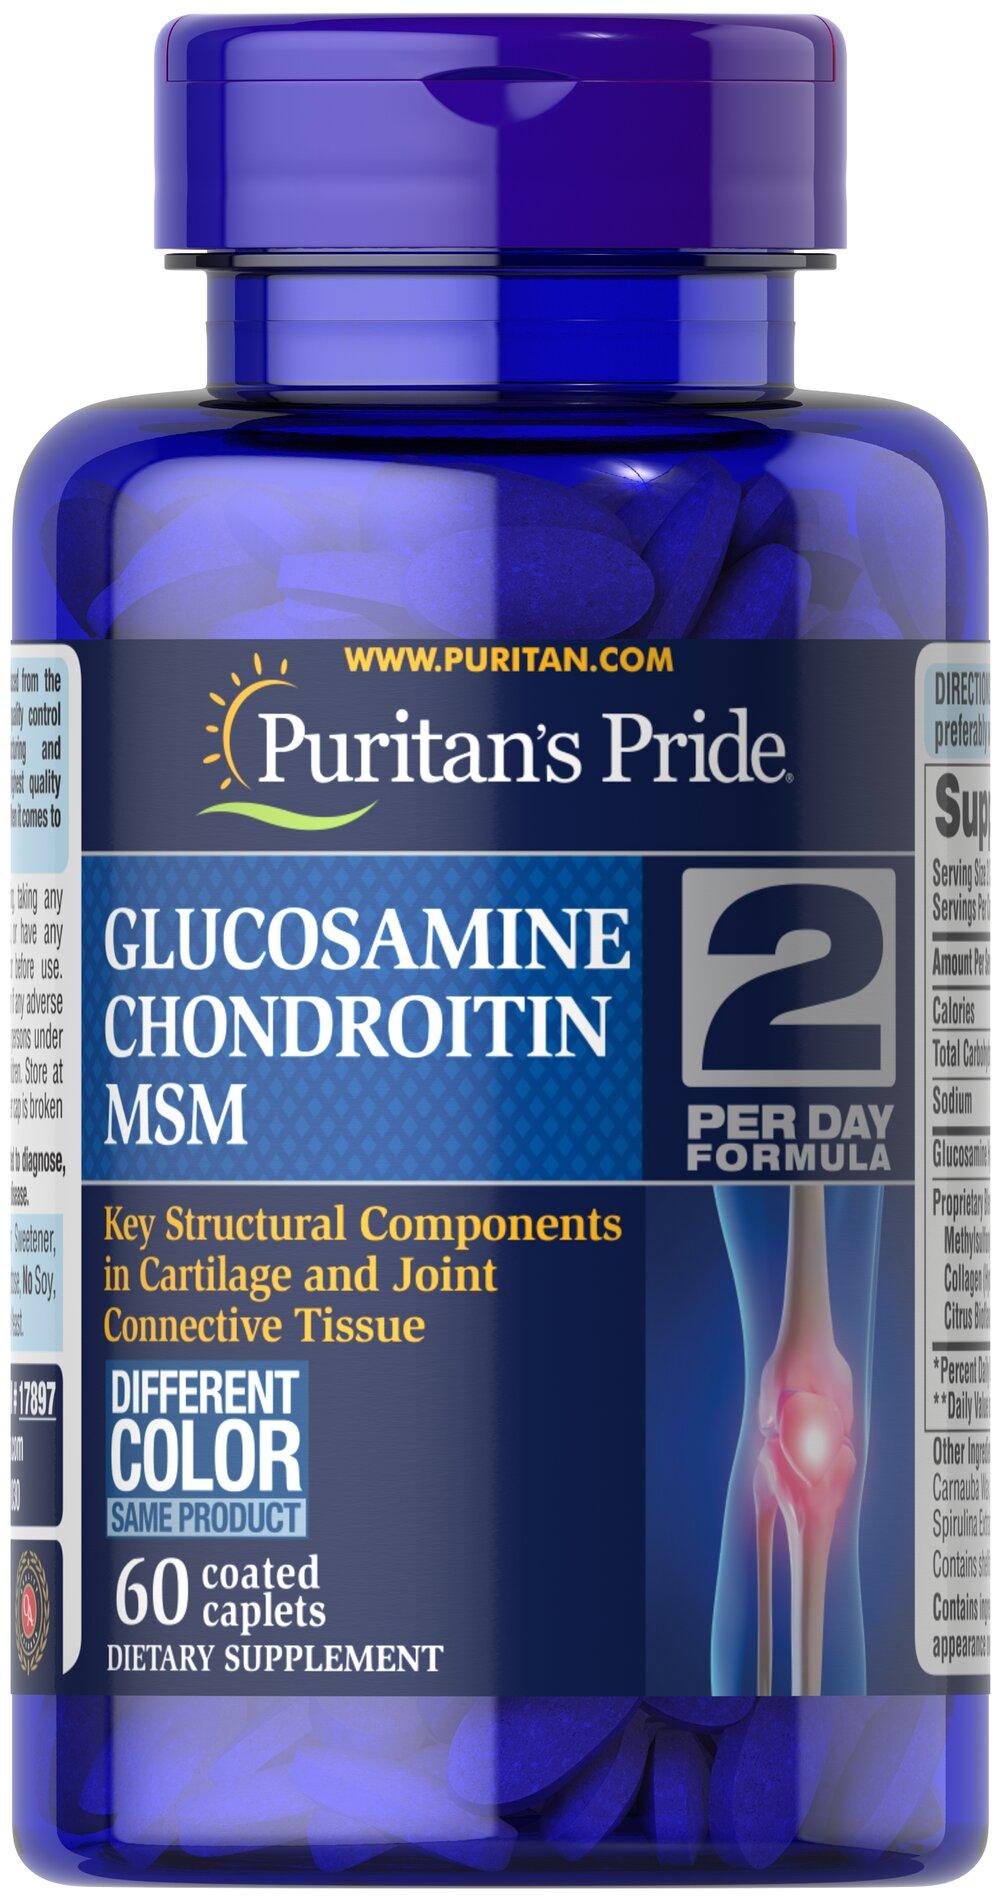 Puritan's Pride Glucosamine + Chondroitine + MSM - mondialpharma.com